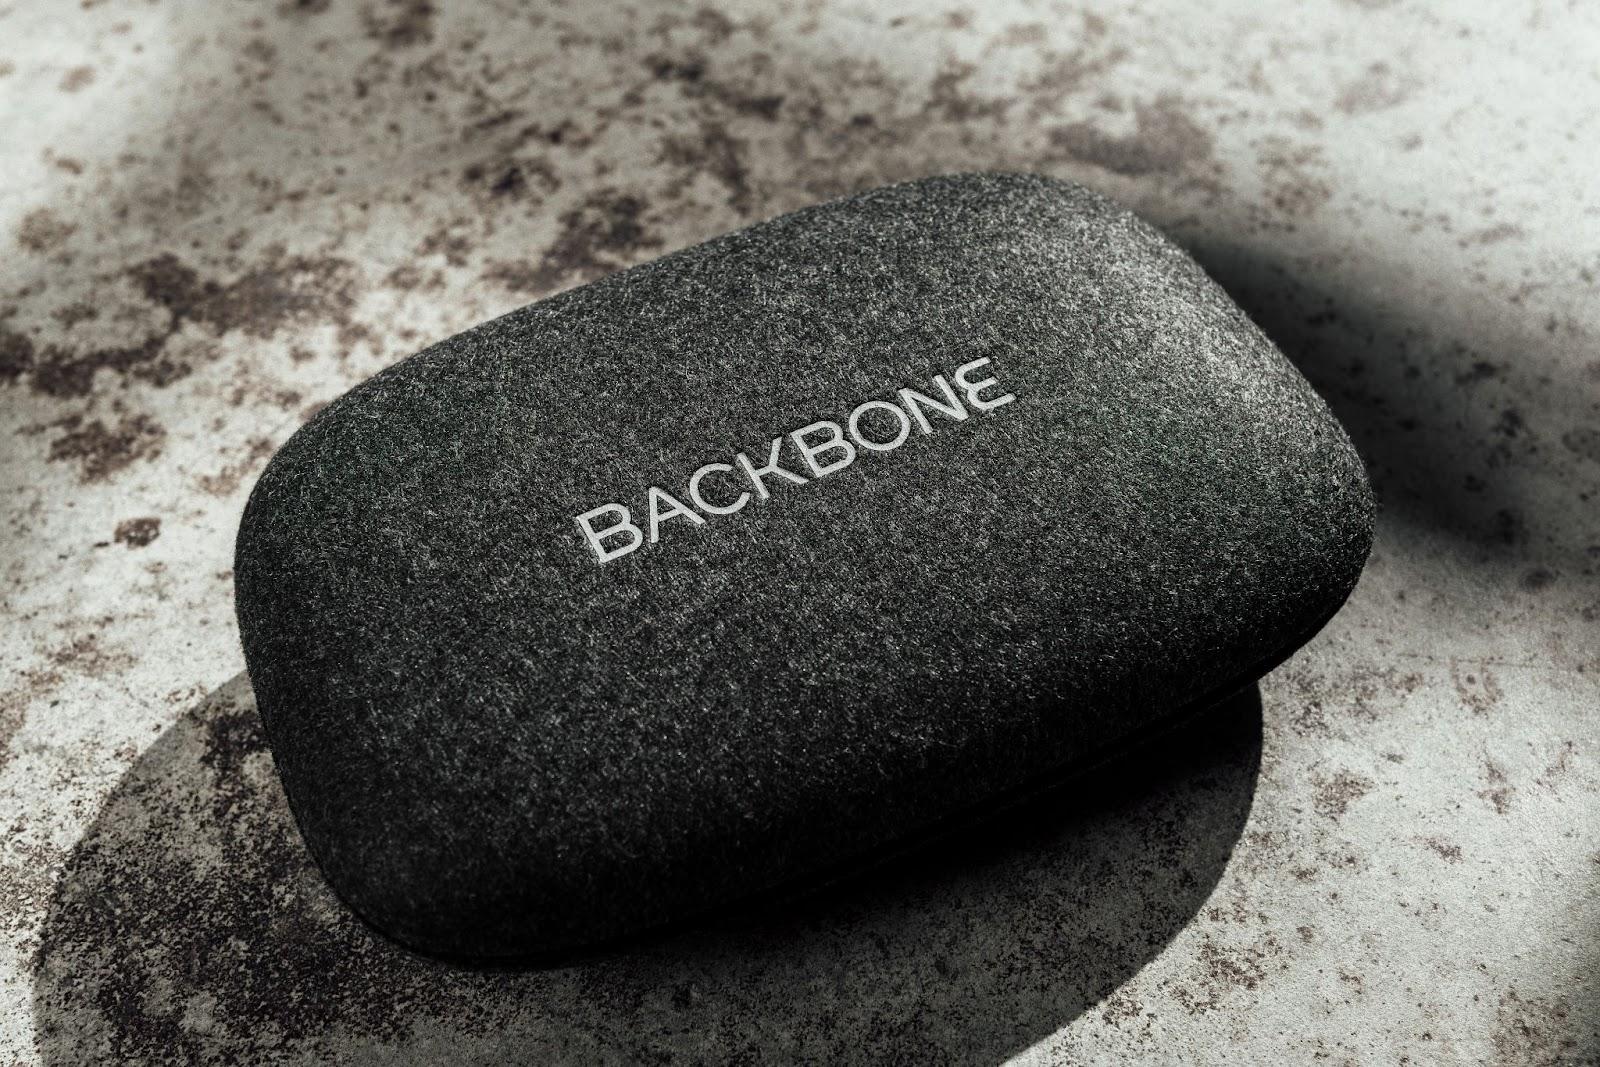 Black Backbone One controller Carrying Case